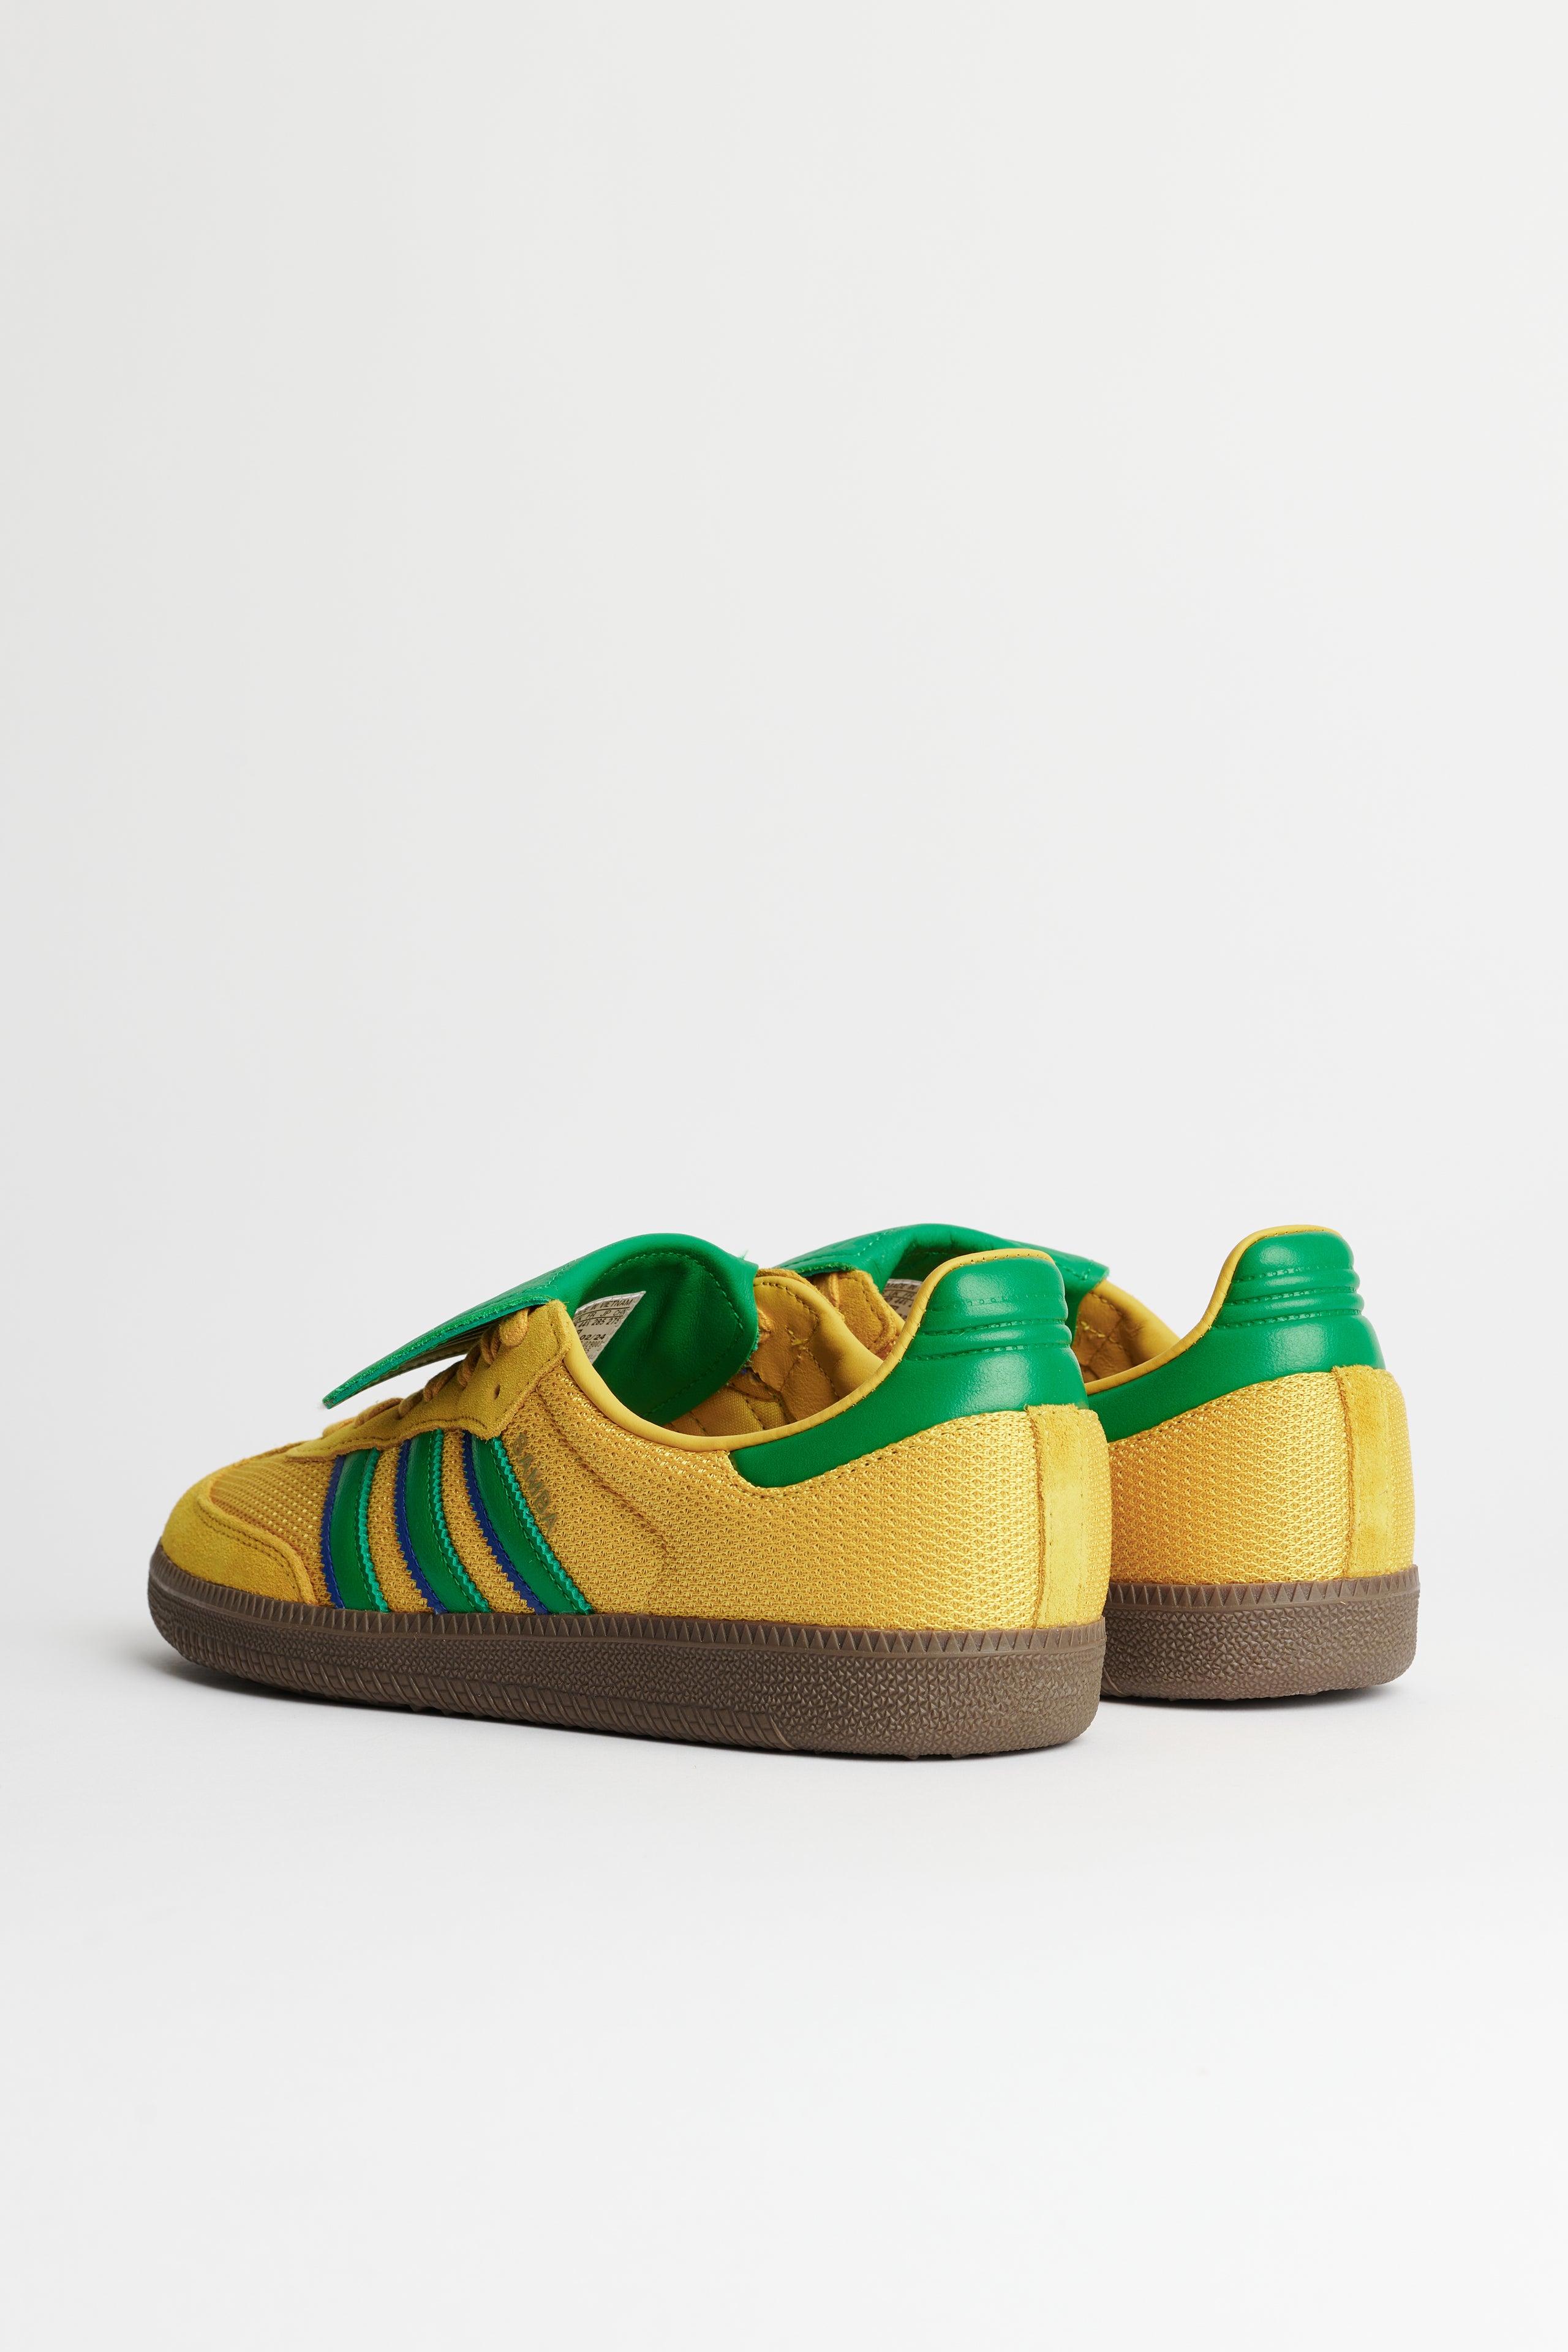 adidas Originals Samba Lt Preyel / Green